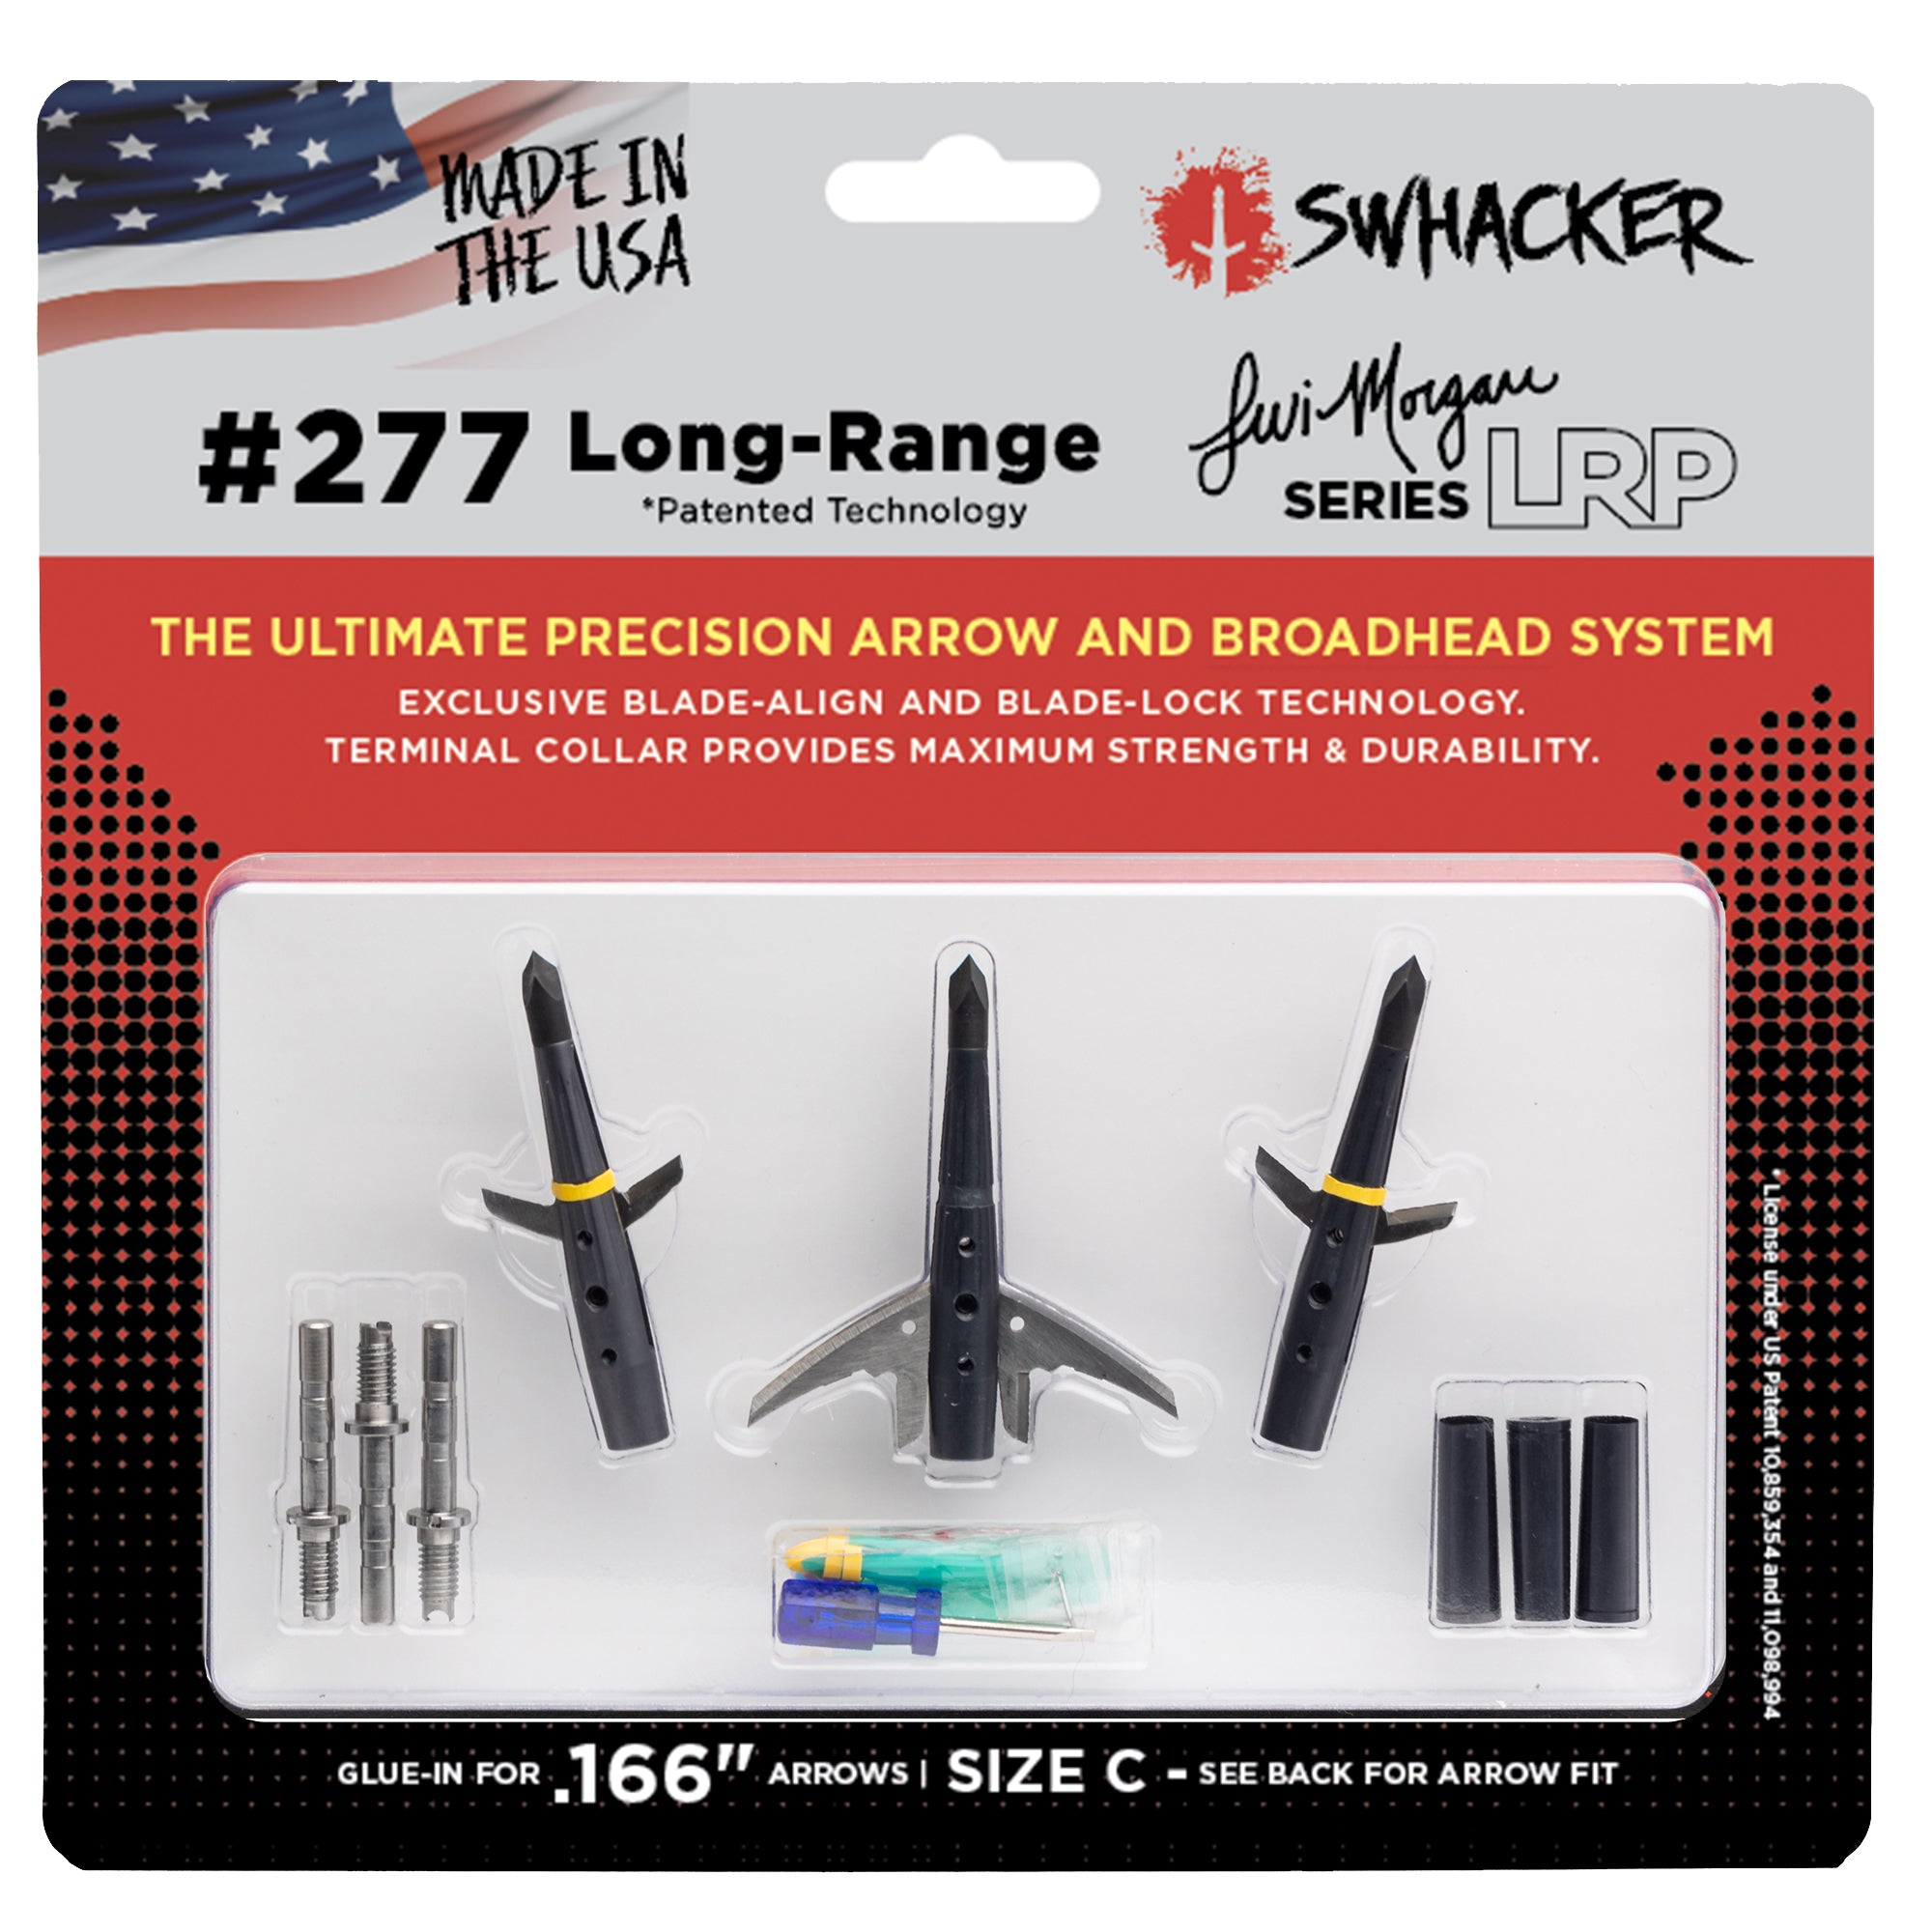 Swhacker LRP Broadhead #277 - Size C fits Arrow Shaft OD .232" to .235"